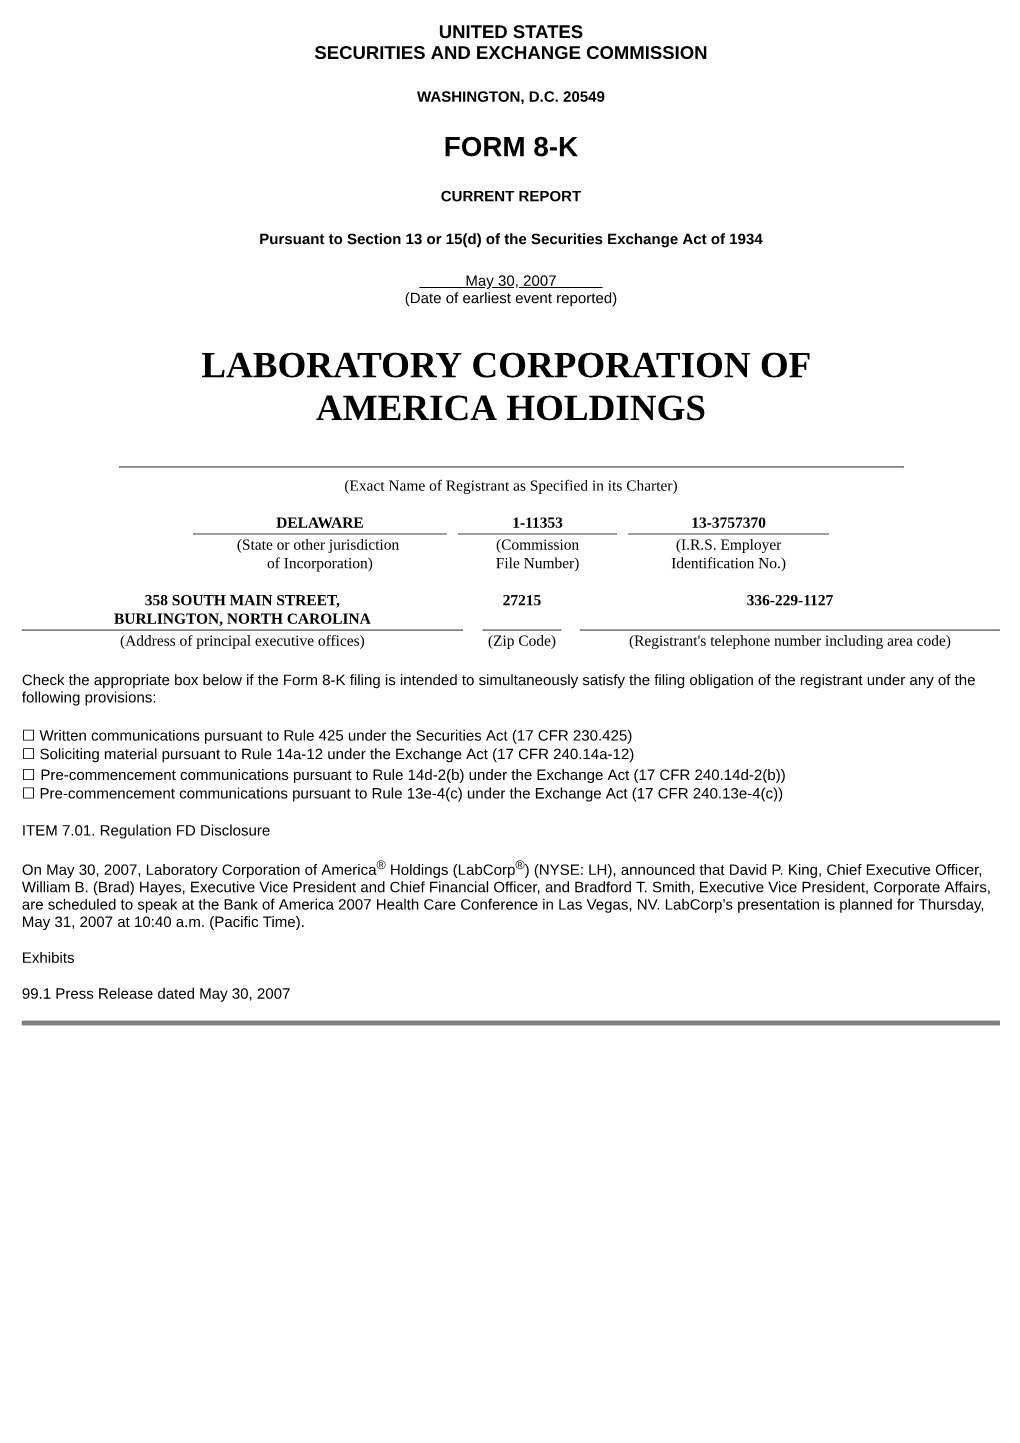 Laboratory Corporation of America Holdings